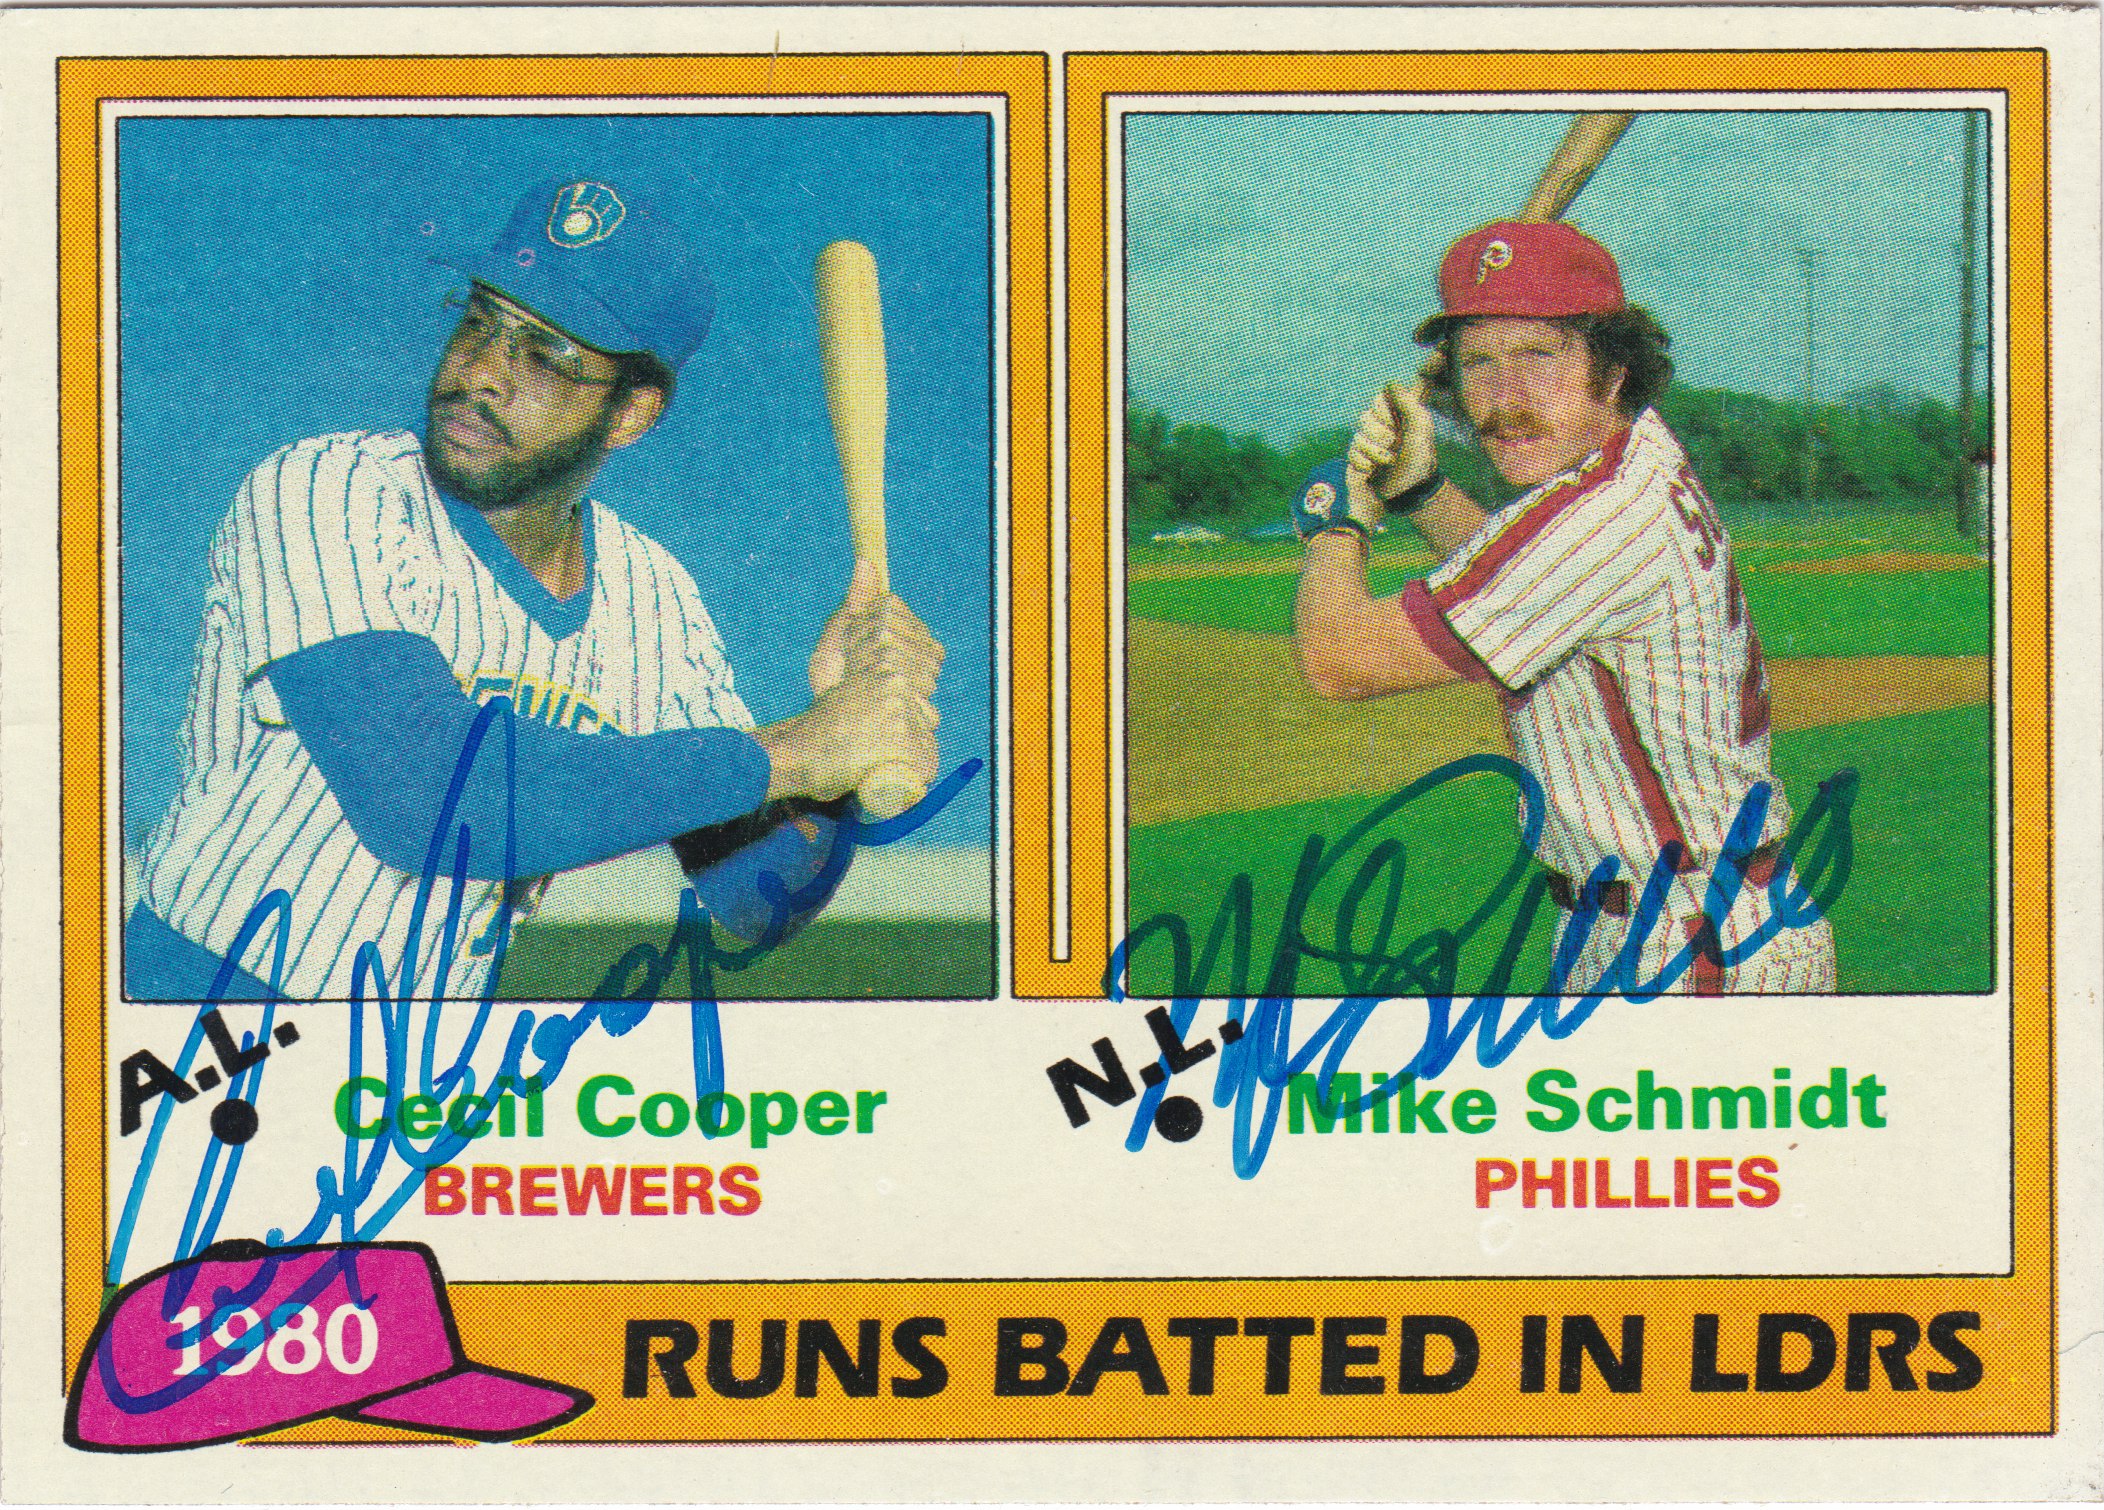 1980 Topps Mike Schmidt Baseball Card, Phillies 3rd Base